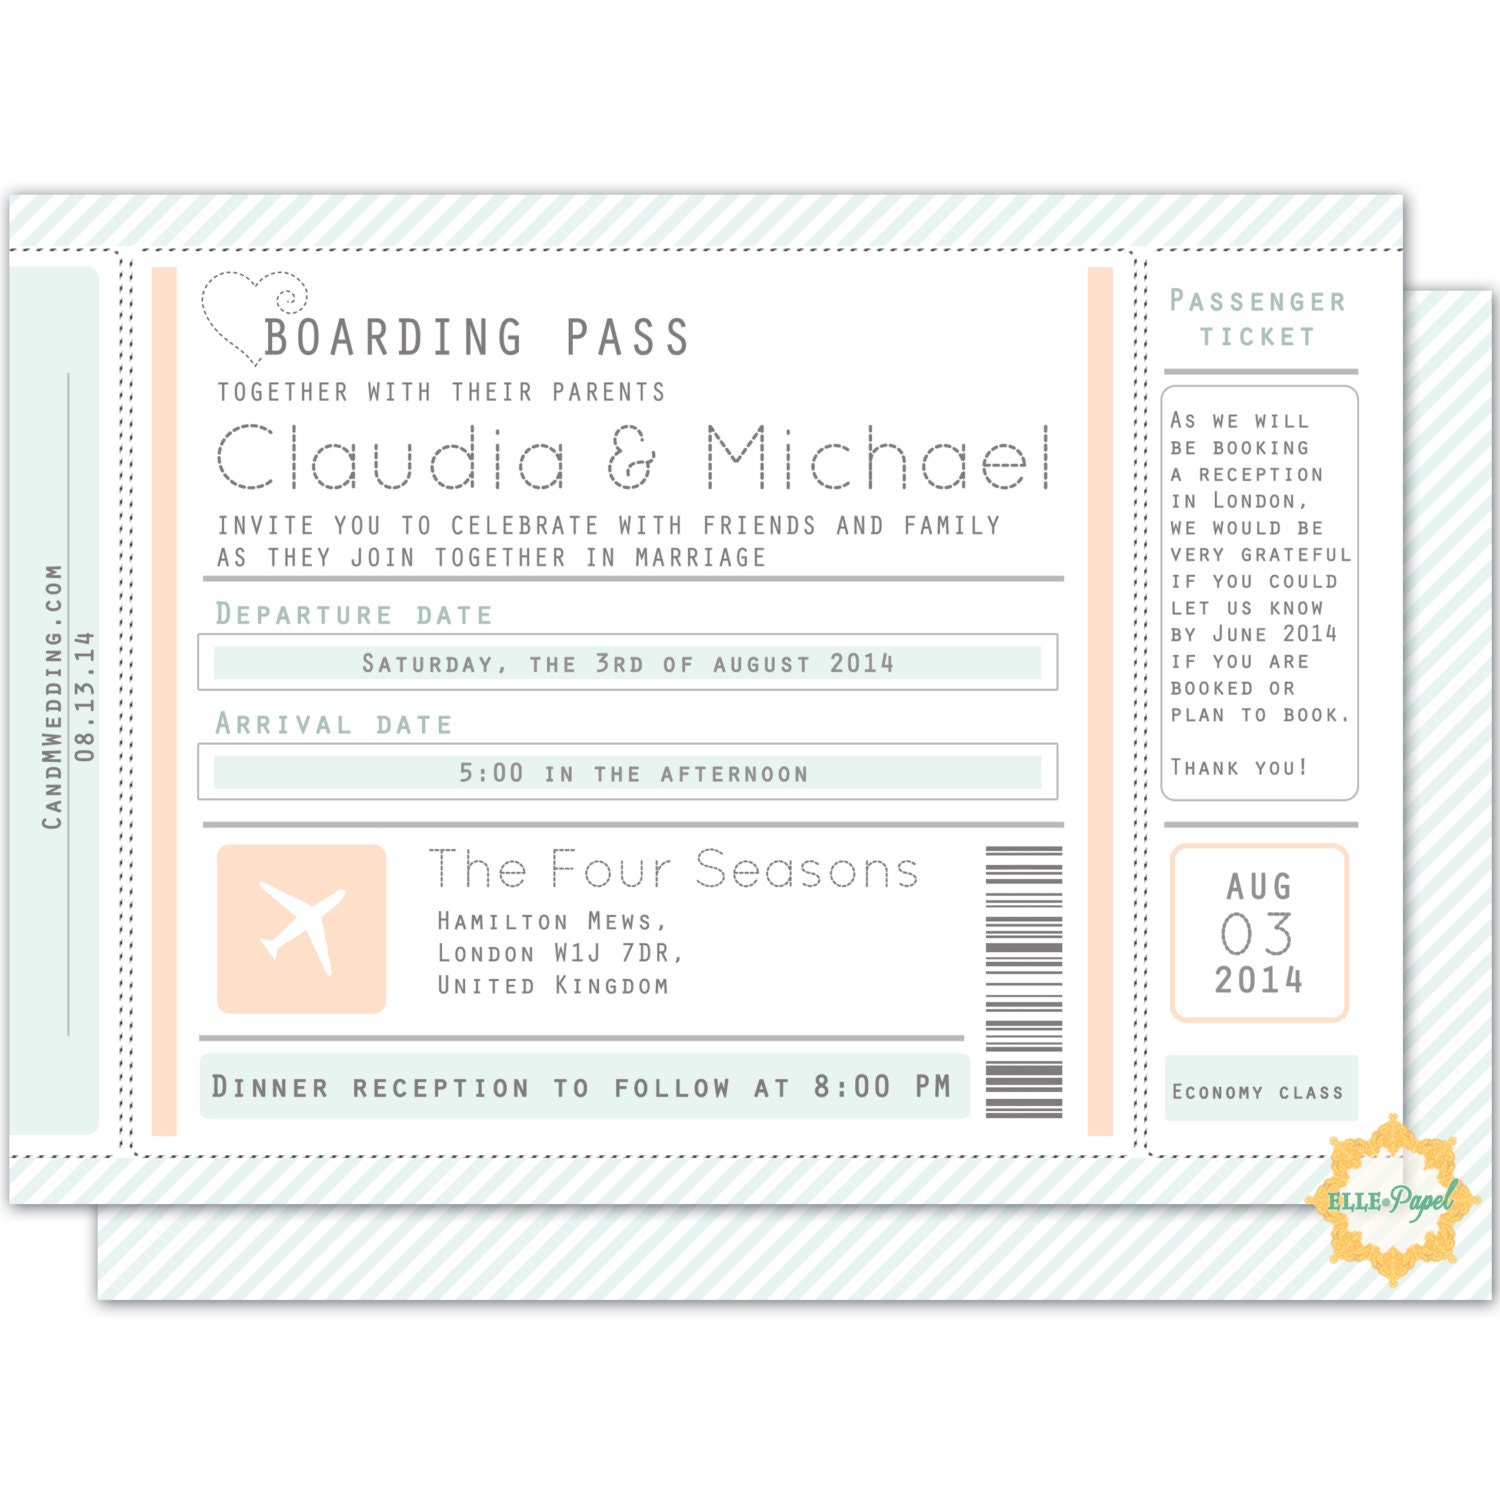 Printable Wedding Invitation: Travel Boarding Pass - Printable Boarding Pass Invitation- Mint Green and Peach- Wedding Abroad